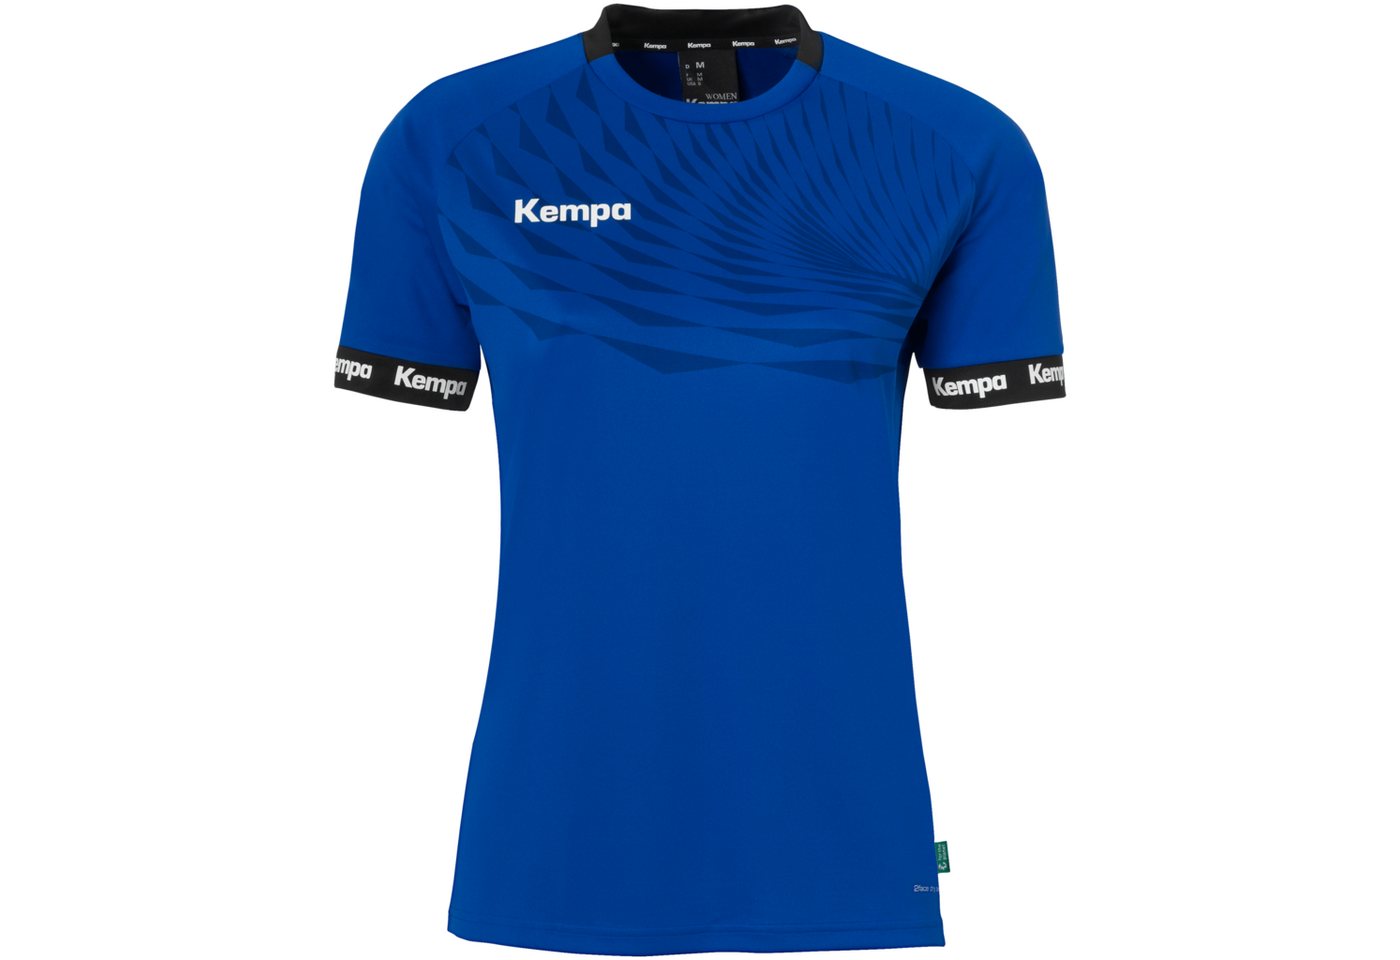 Kempa Handballtrikot WAVE 26 SHIRT WOMEN kempablau weiss › blau  - Onlineshop OTTO